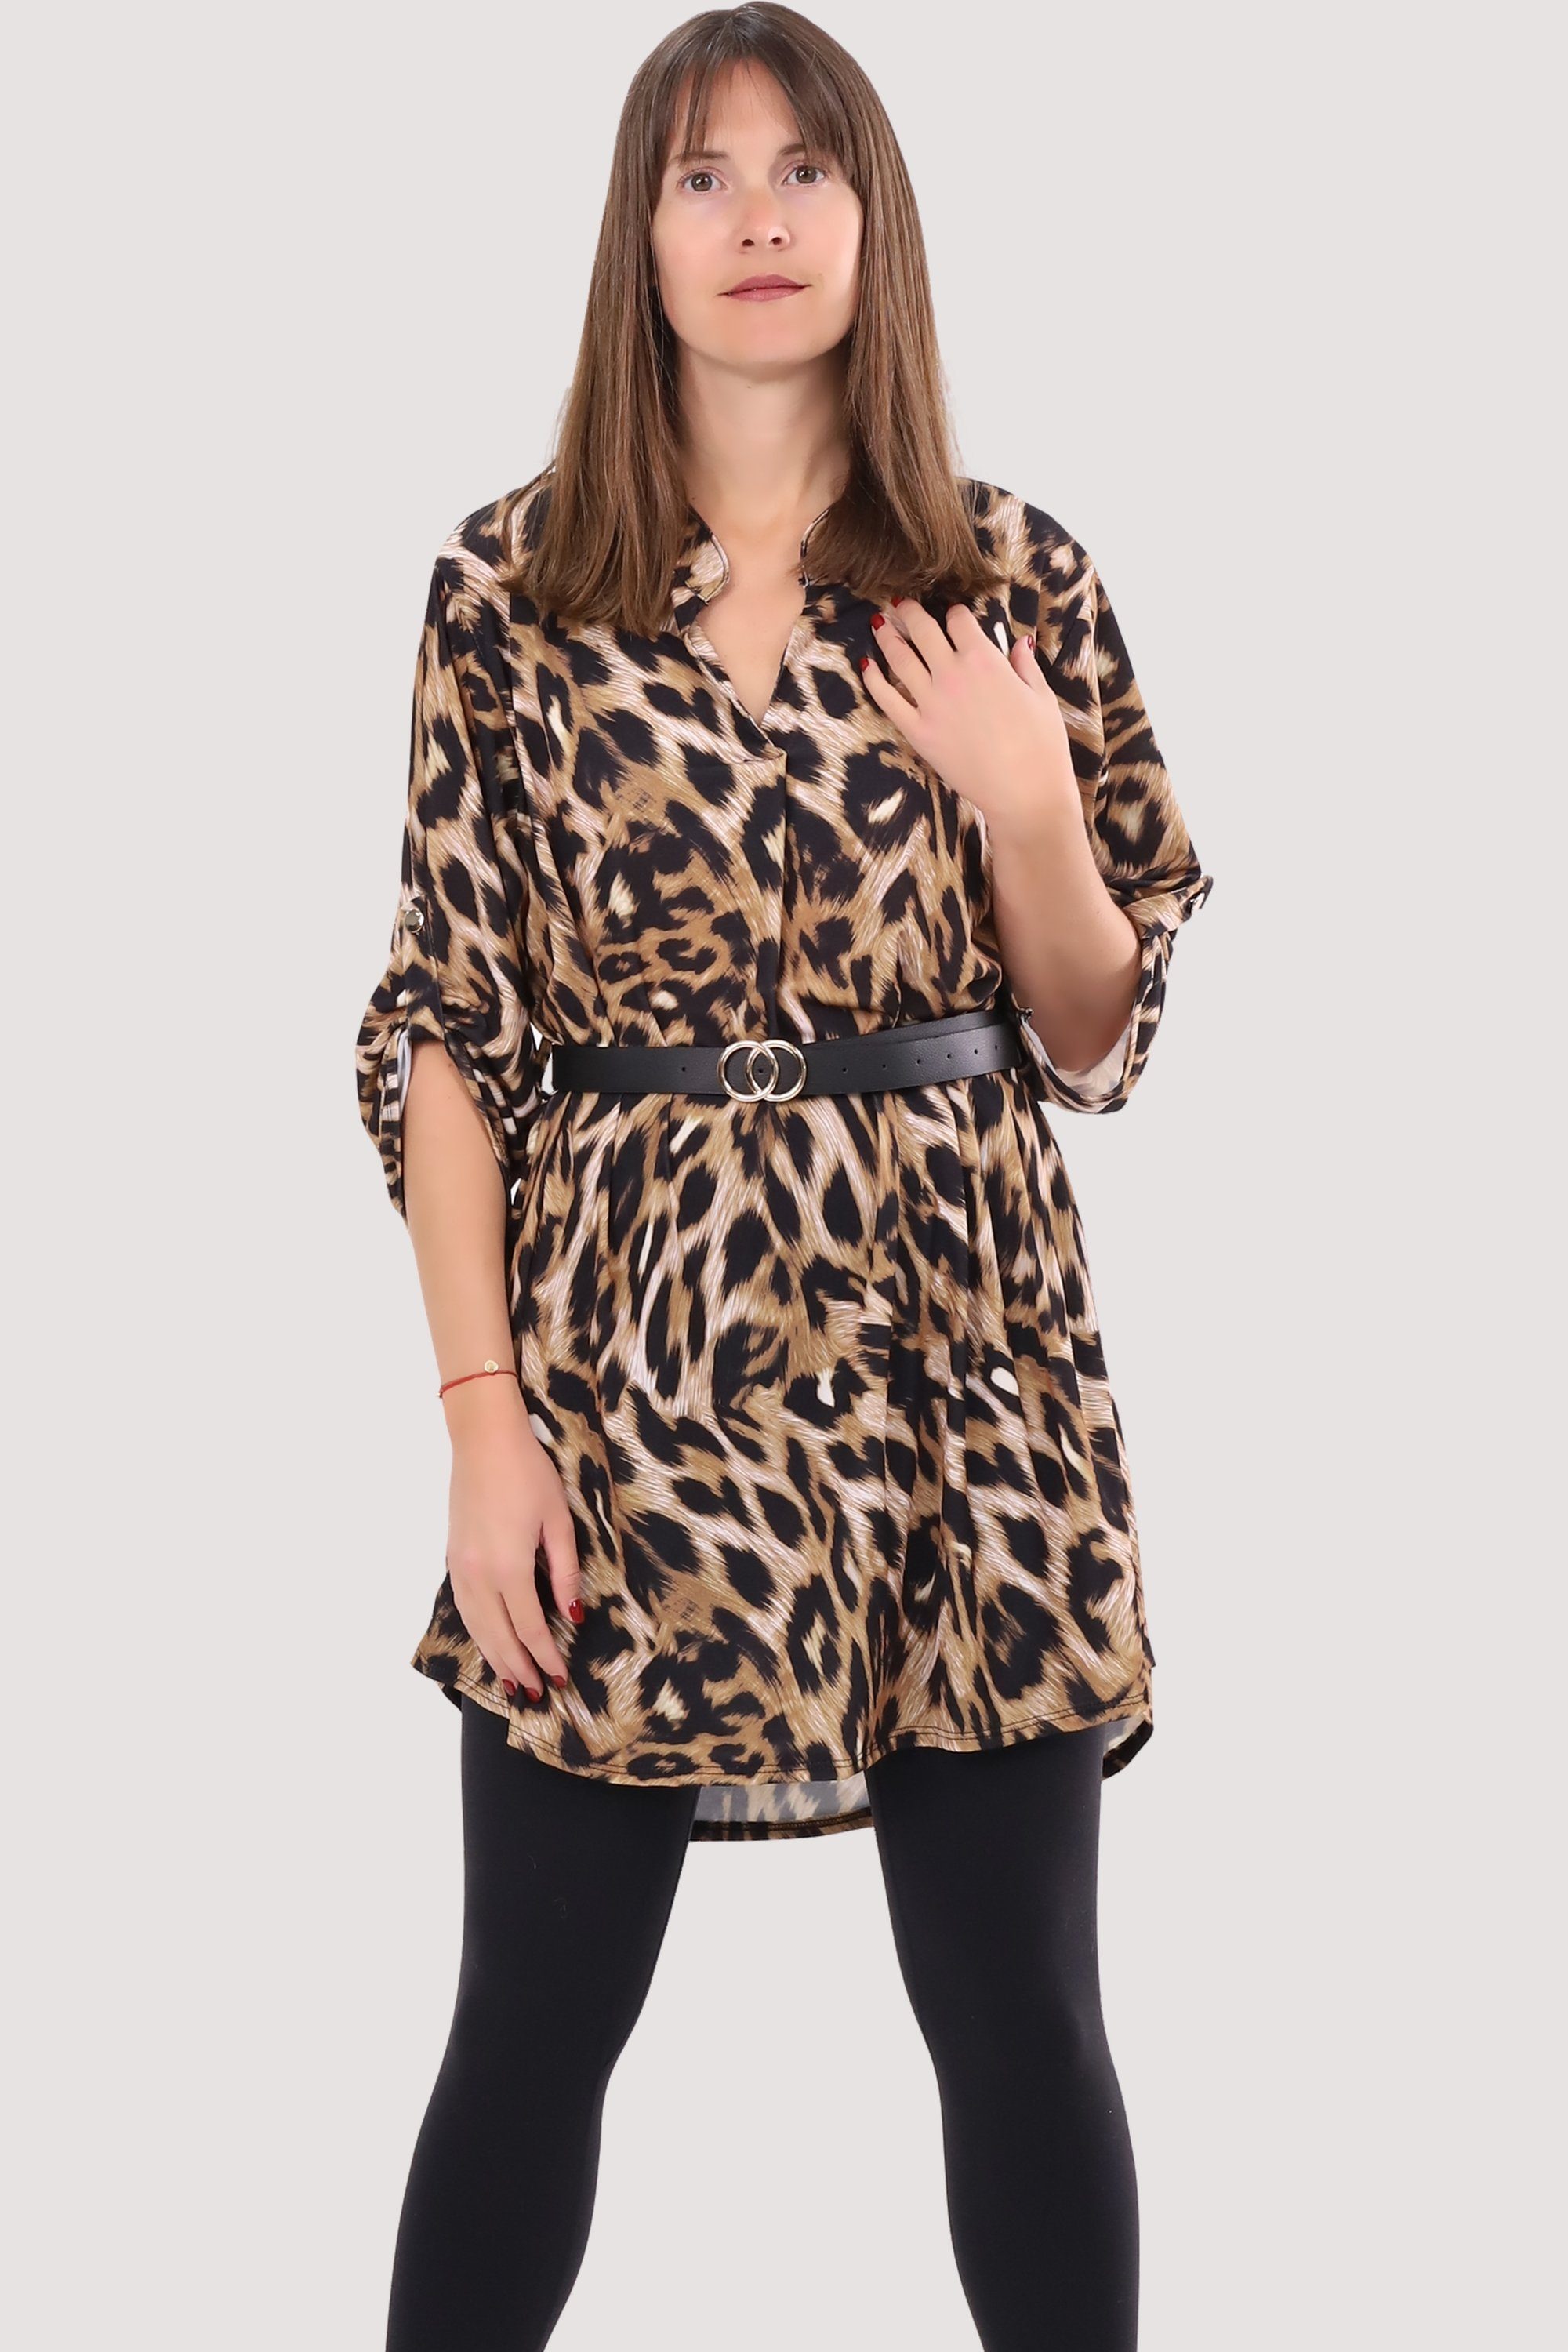 malito more than fashion Druckkleid 23203 Animalprint Kleid Tunika Bluse mit Gürtel Einheitsgröße Gepard 3